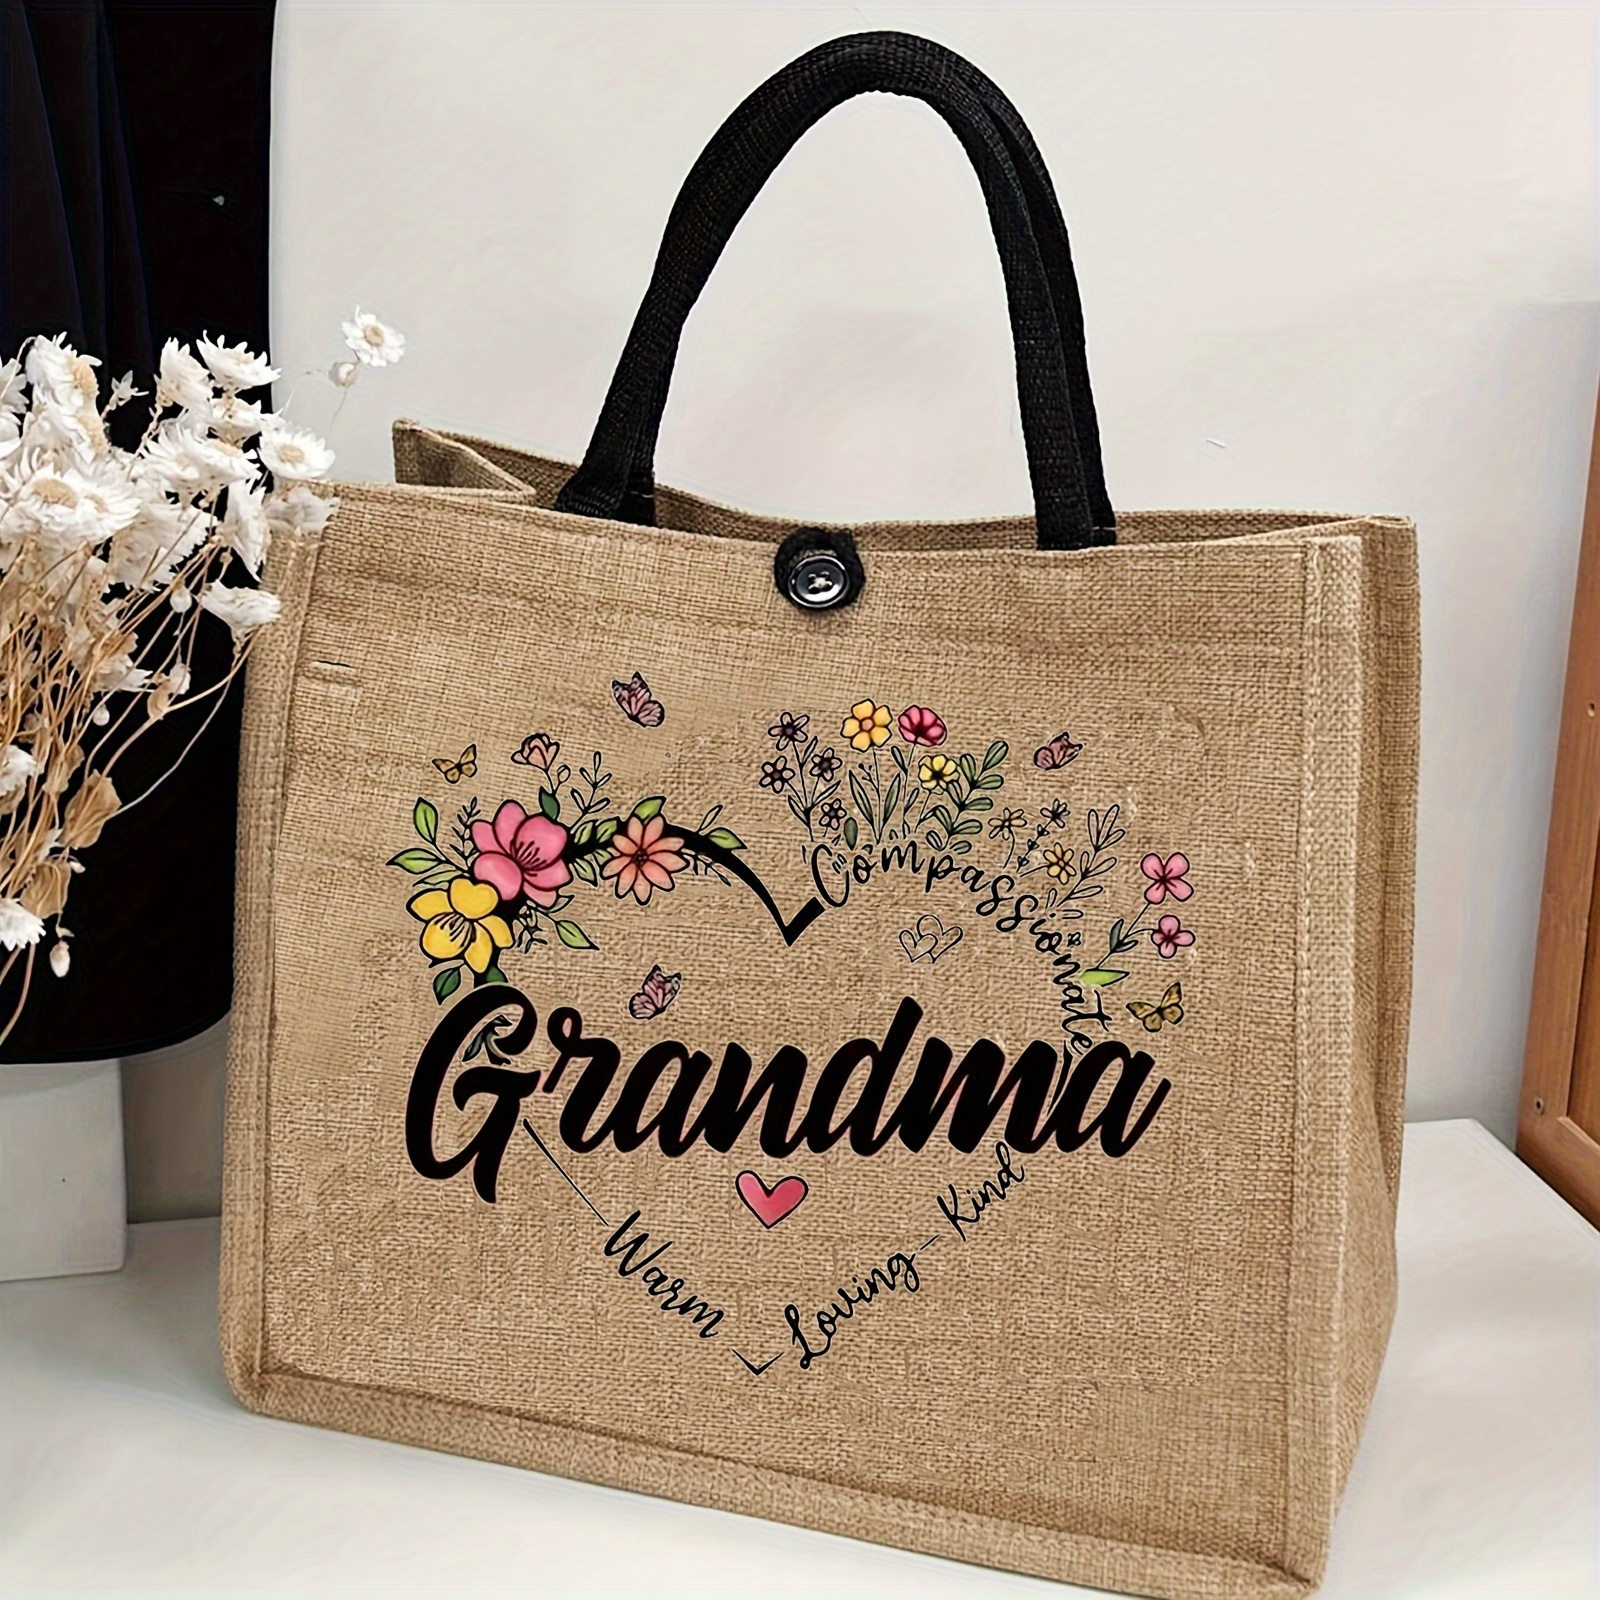 

Fashion Letter Print Tote Bag, Gift Bag For Grandma, Women's Casual Handbag For Travel Beach Shopping